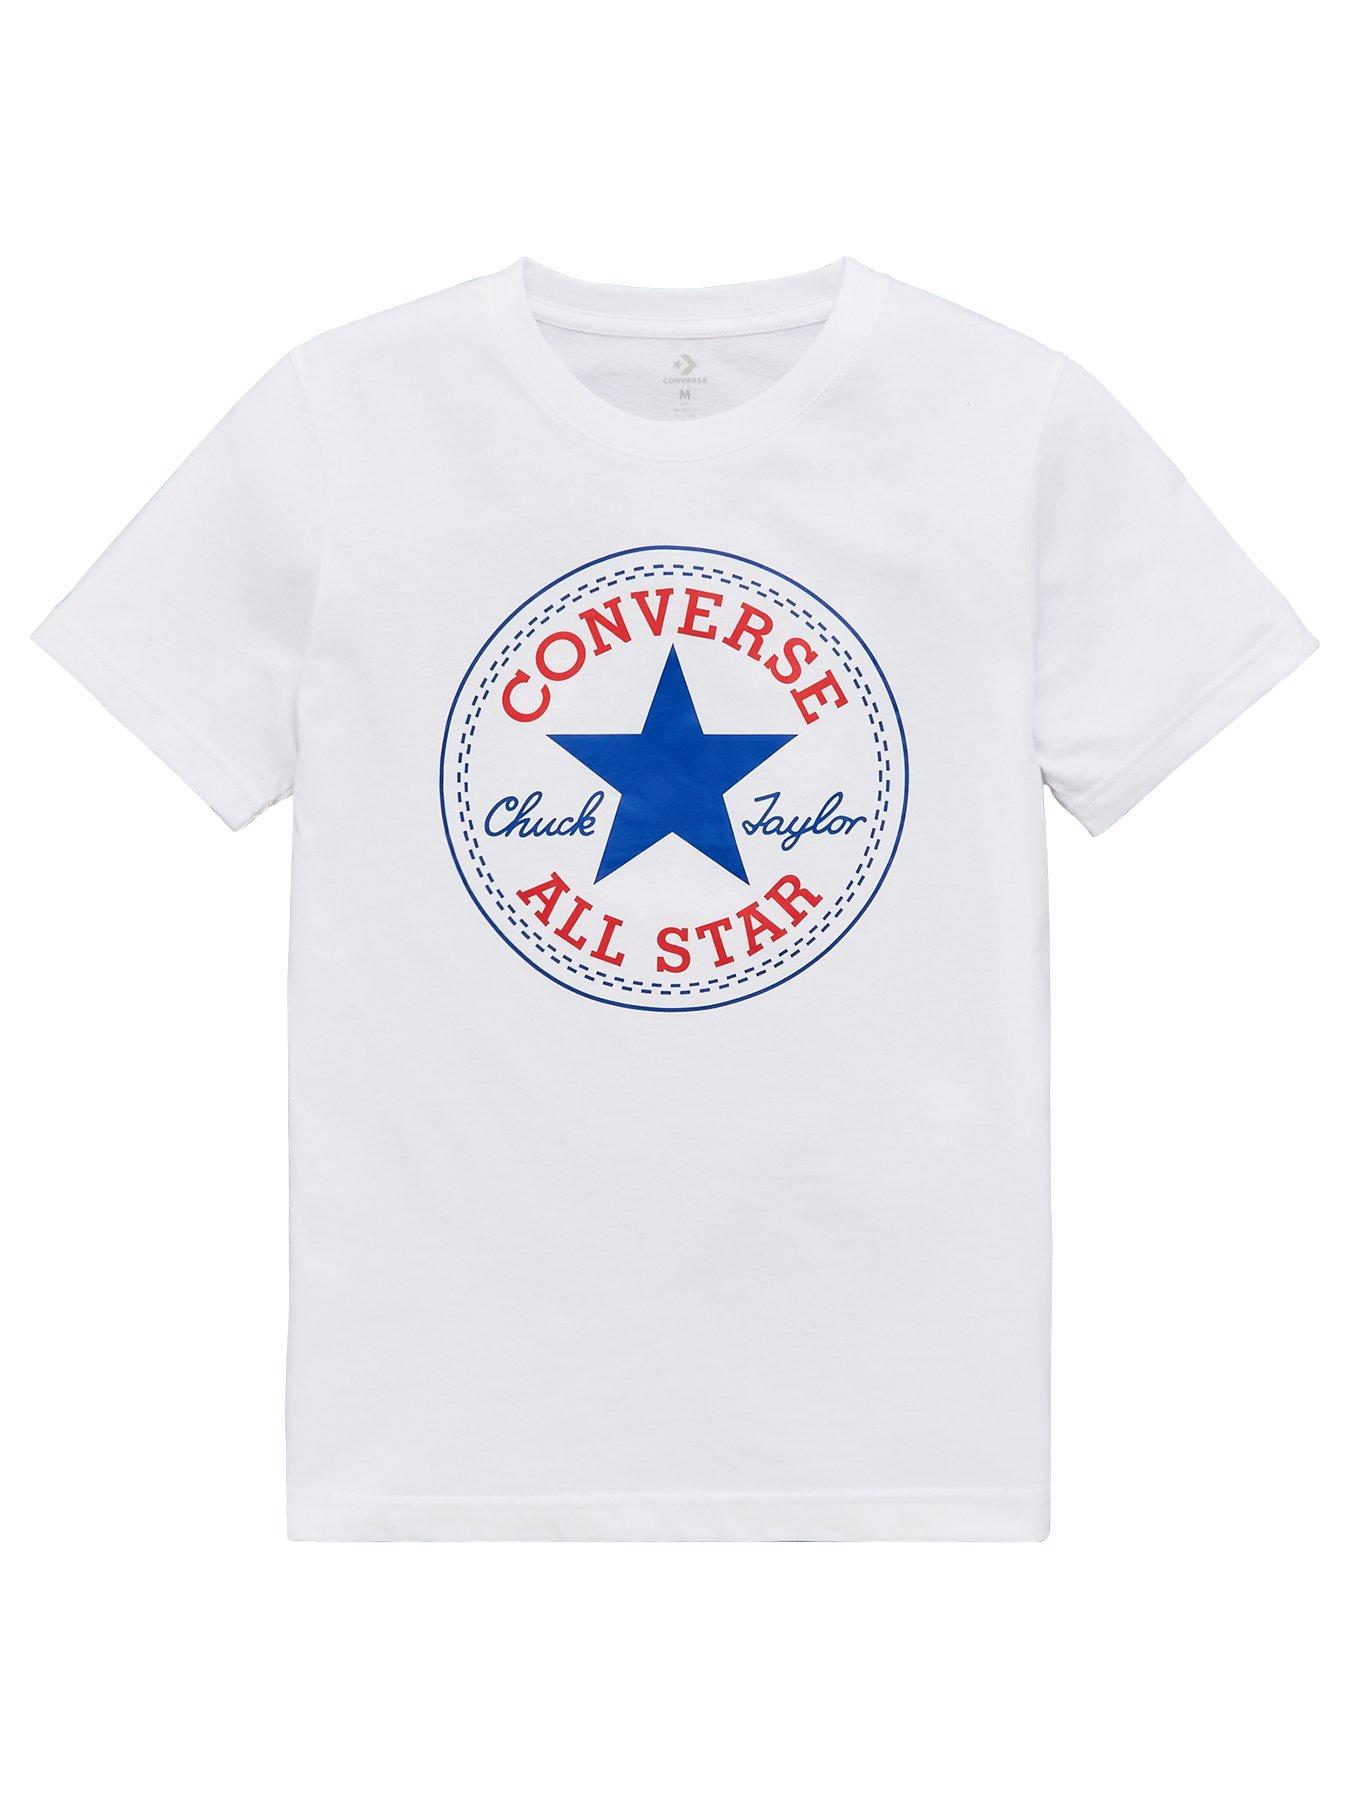 Converse KIDS ALL STAR CHUCK TAYLOR Shorts and T-shirt Set boys